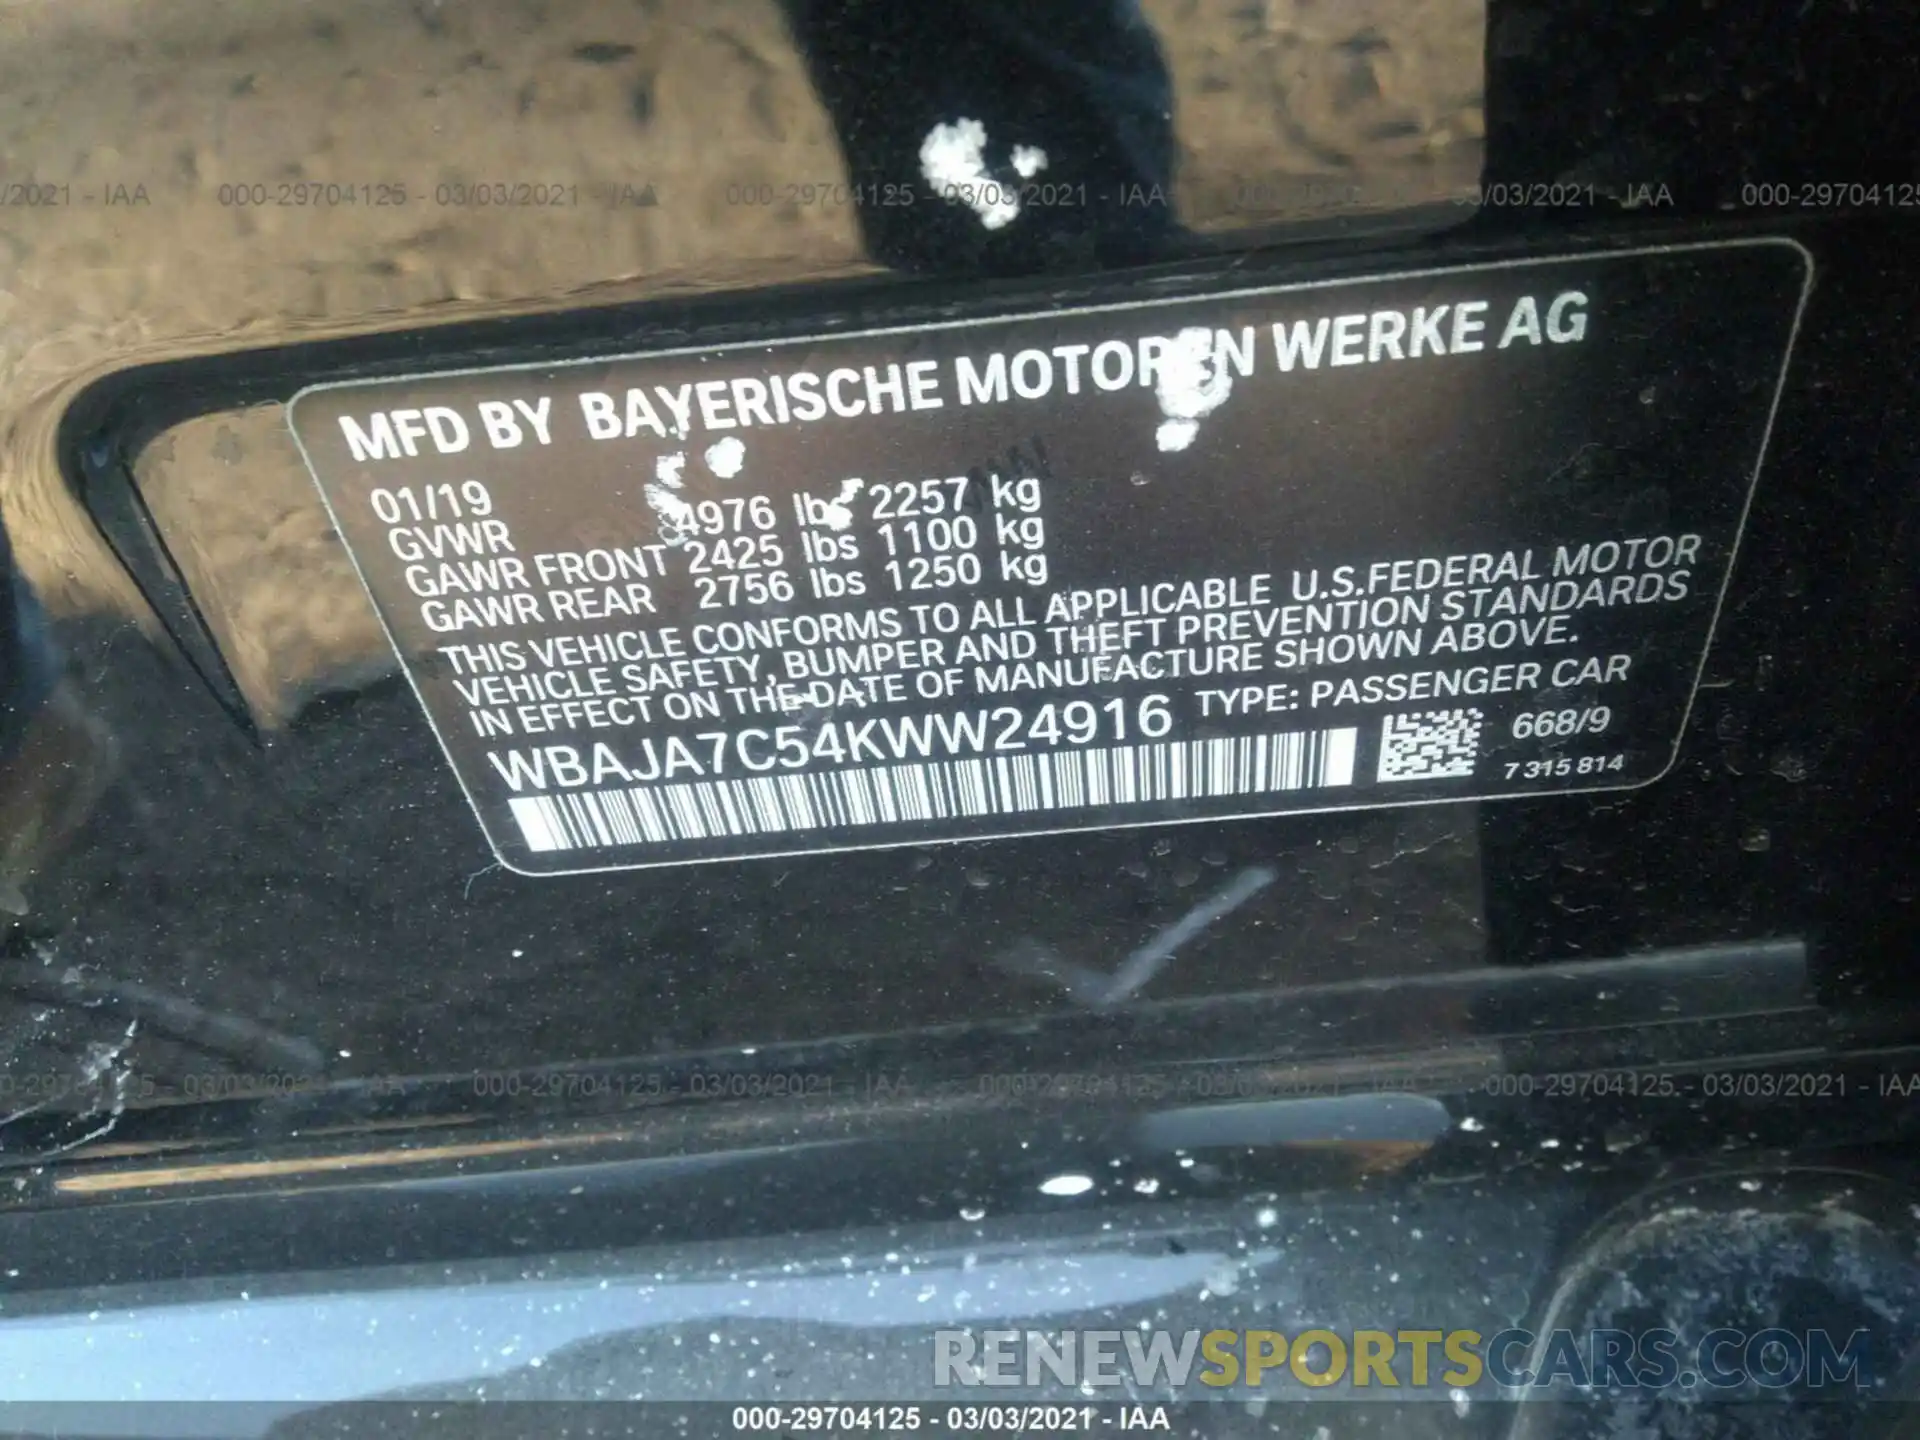 9 Photograph of a damaged car WBAJA7C54KWW24916 BMW 5 SERIES 2019